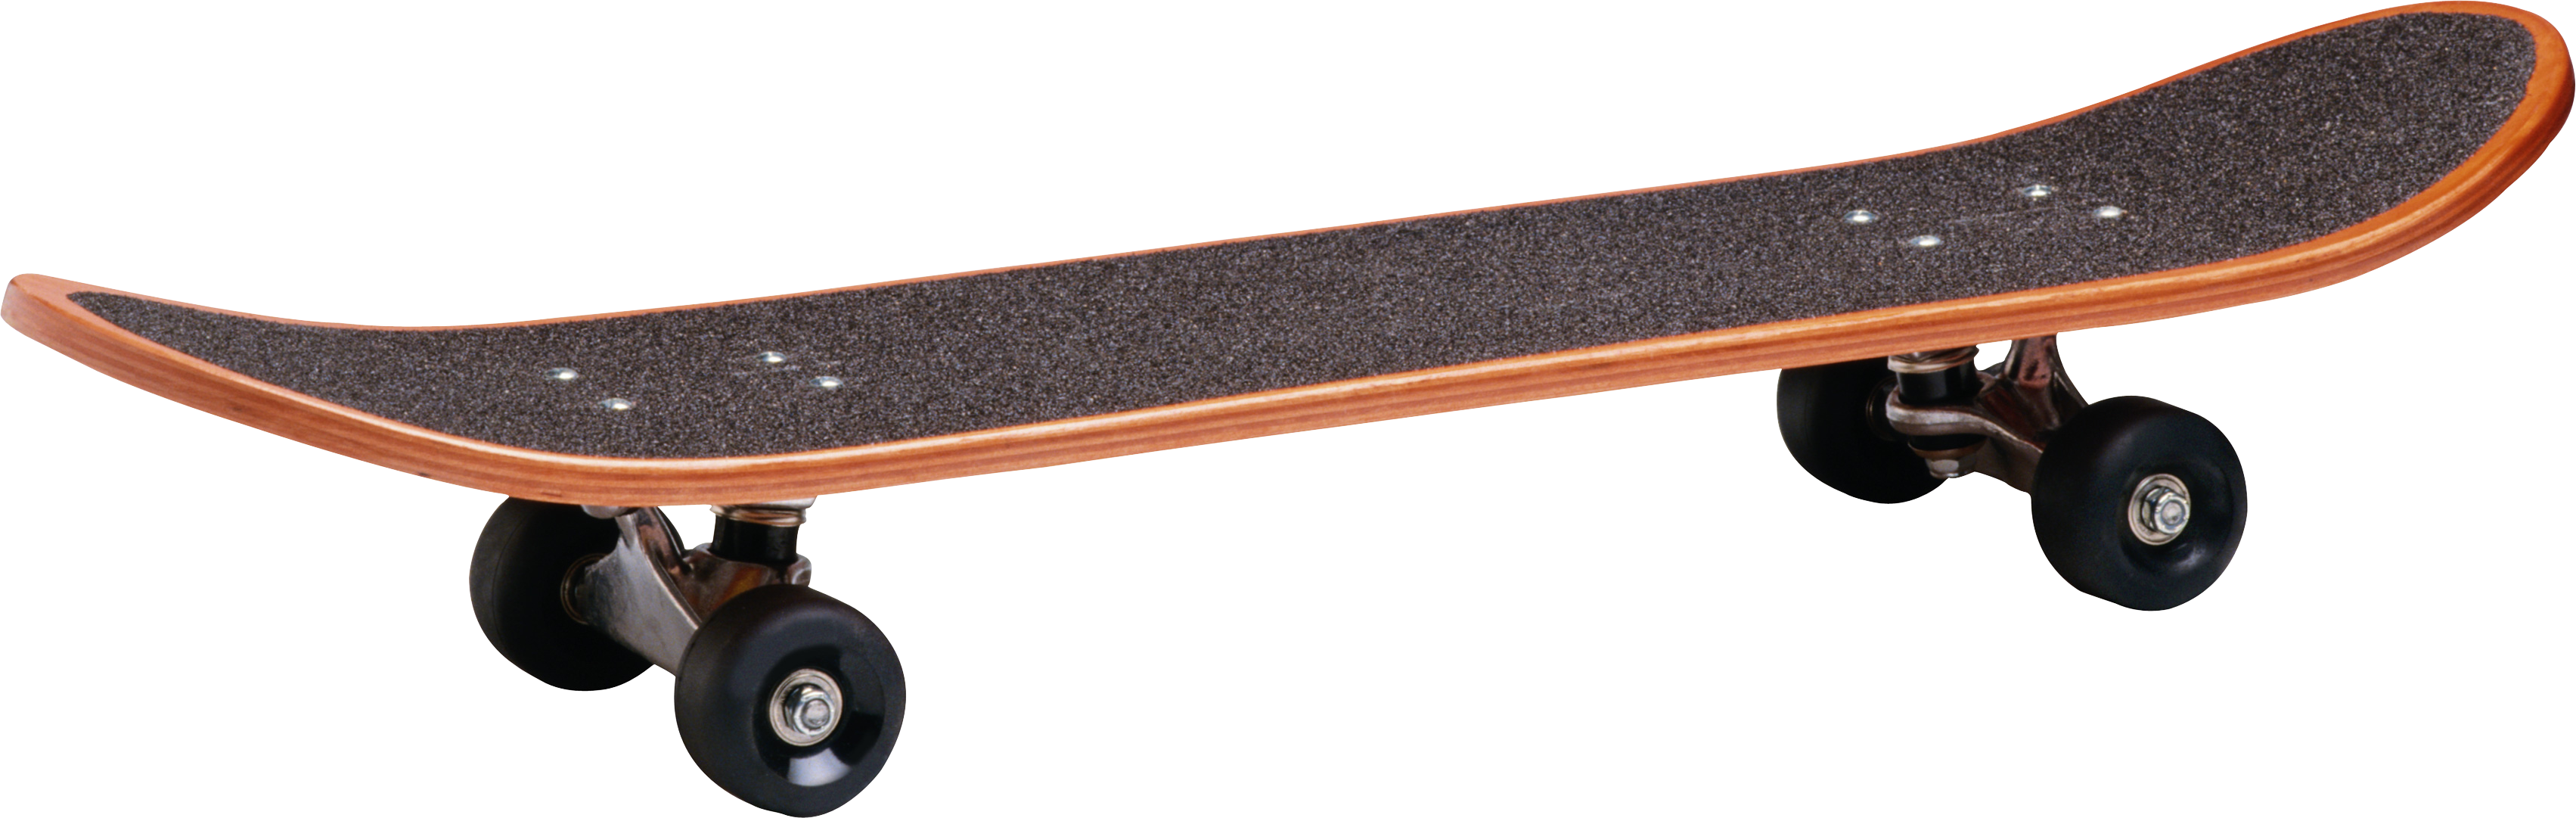 Skateboard HD PNG - 94091